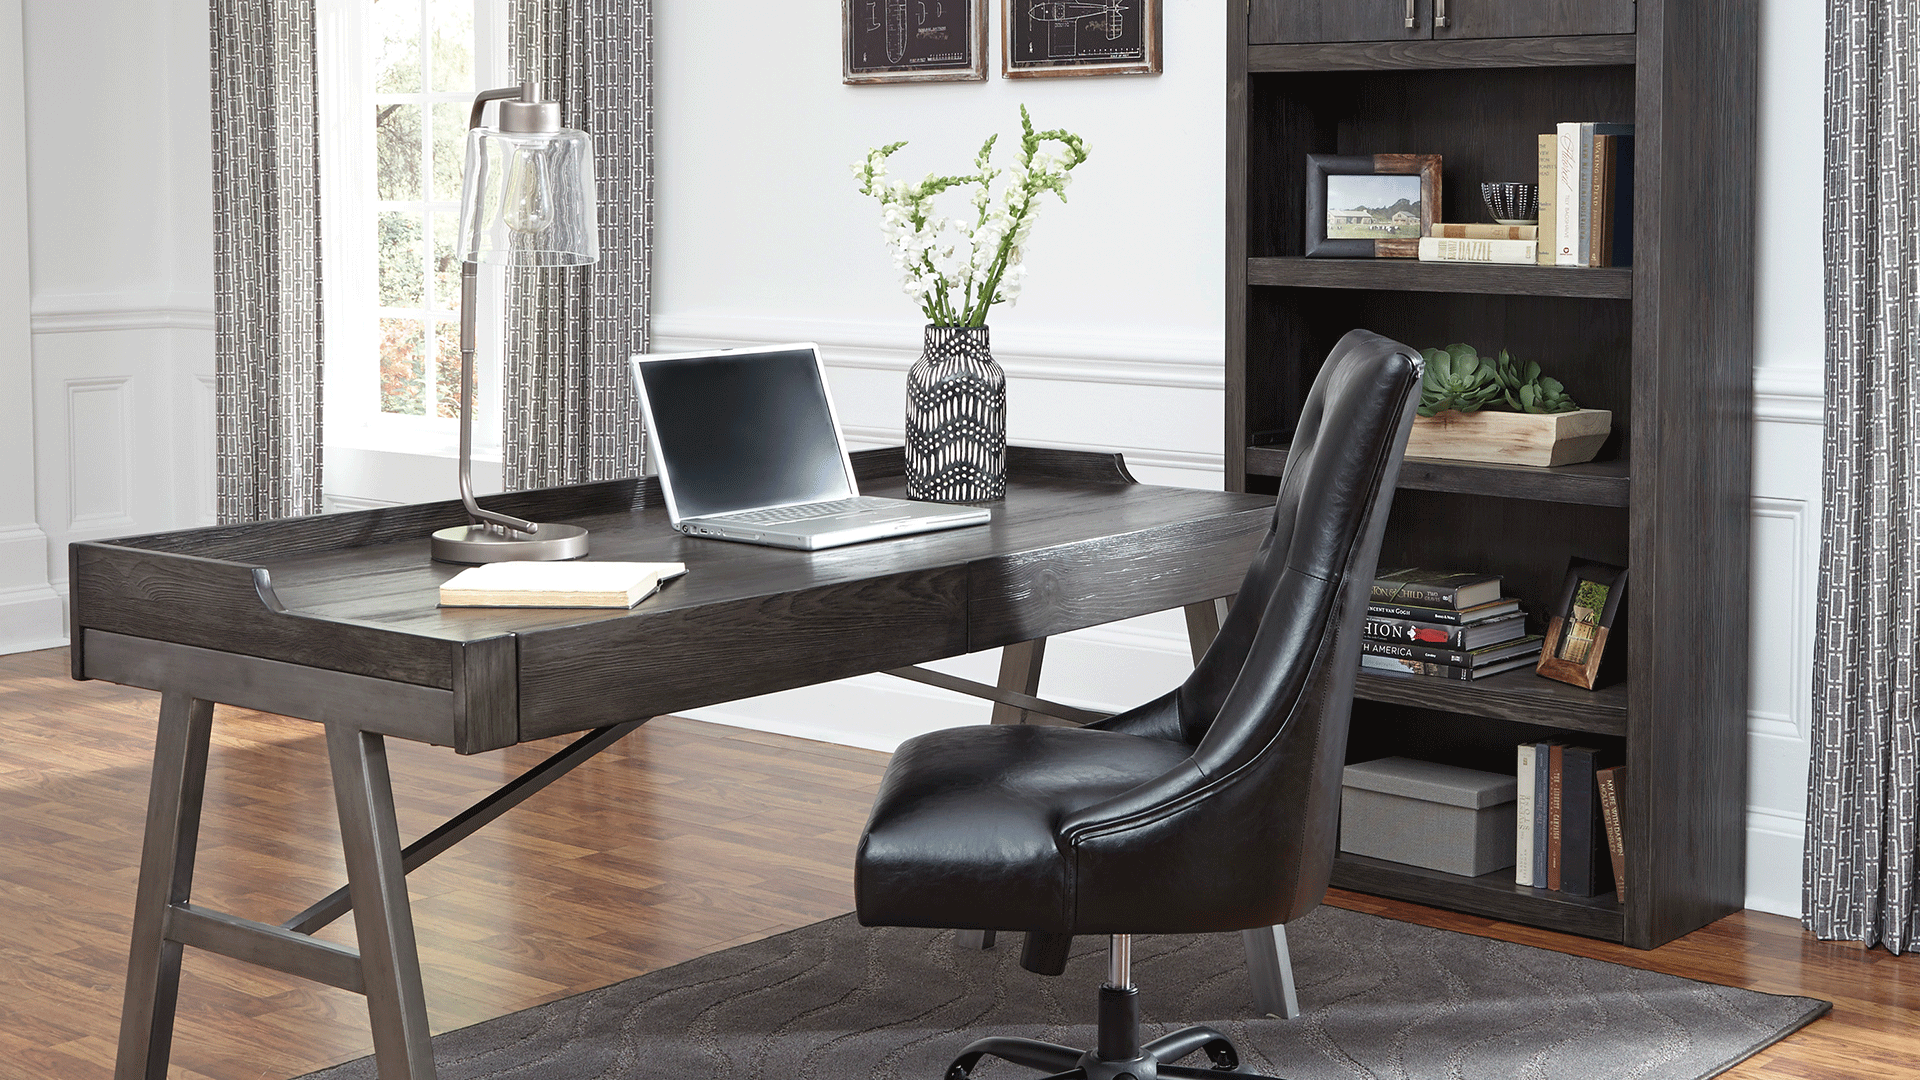 Ashley Furniture HomeStore launches new office desk & bookcase